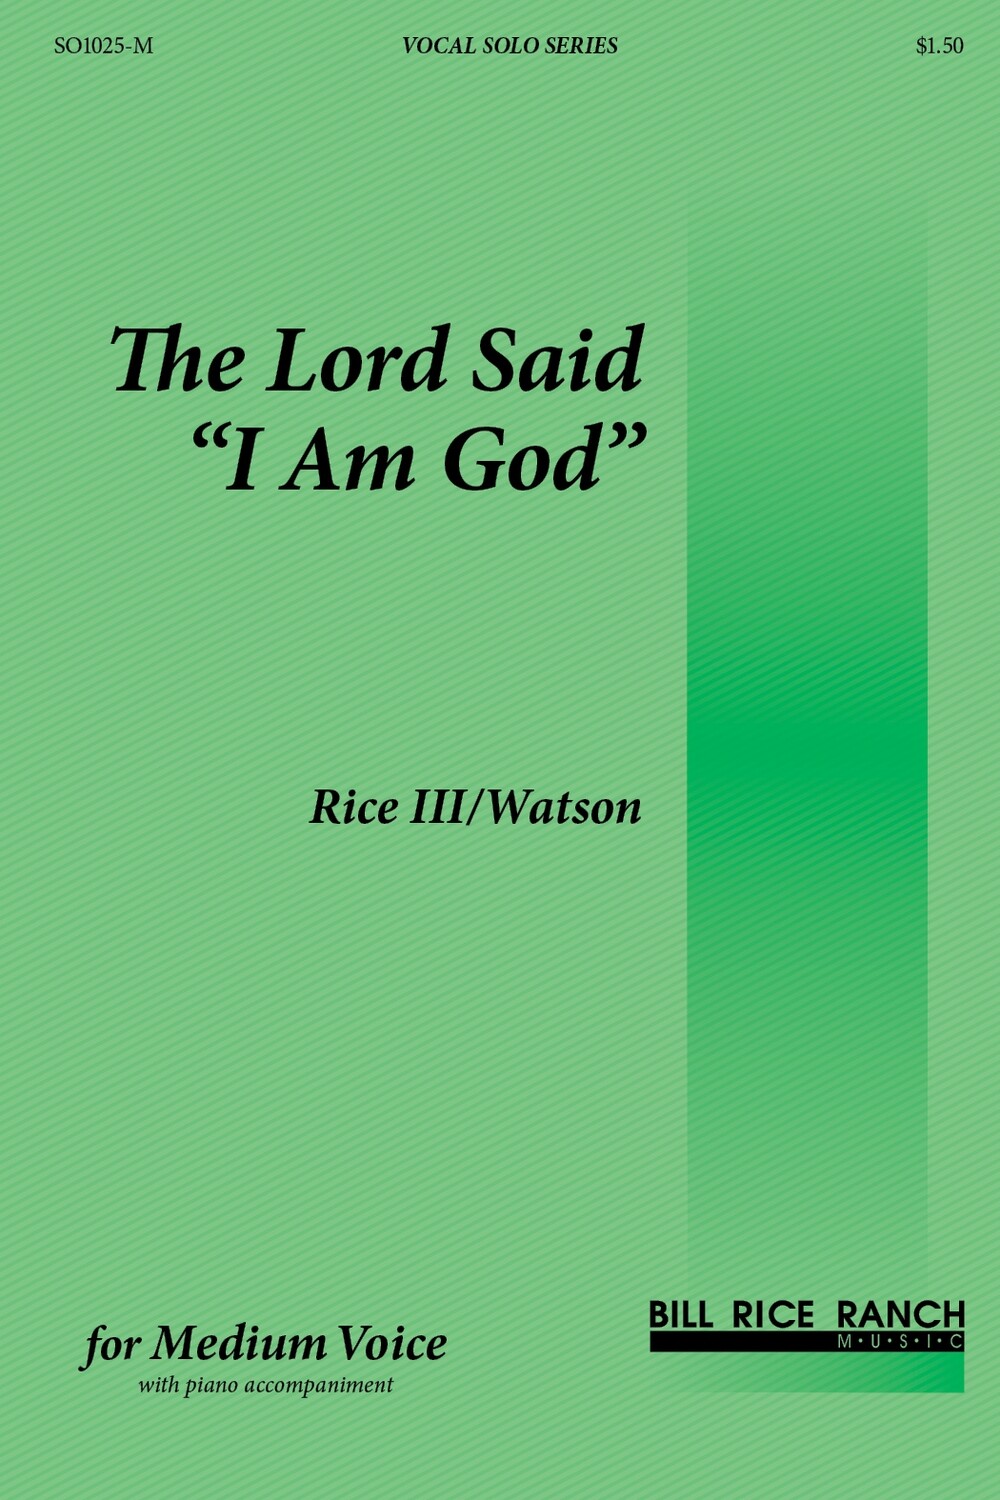 The Lord Said "I AM GOD" (M)